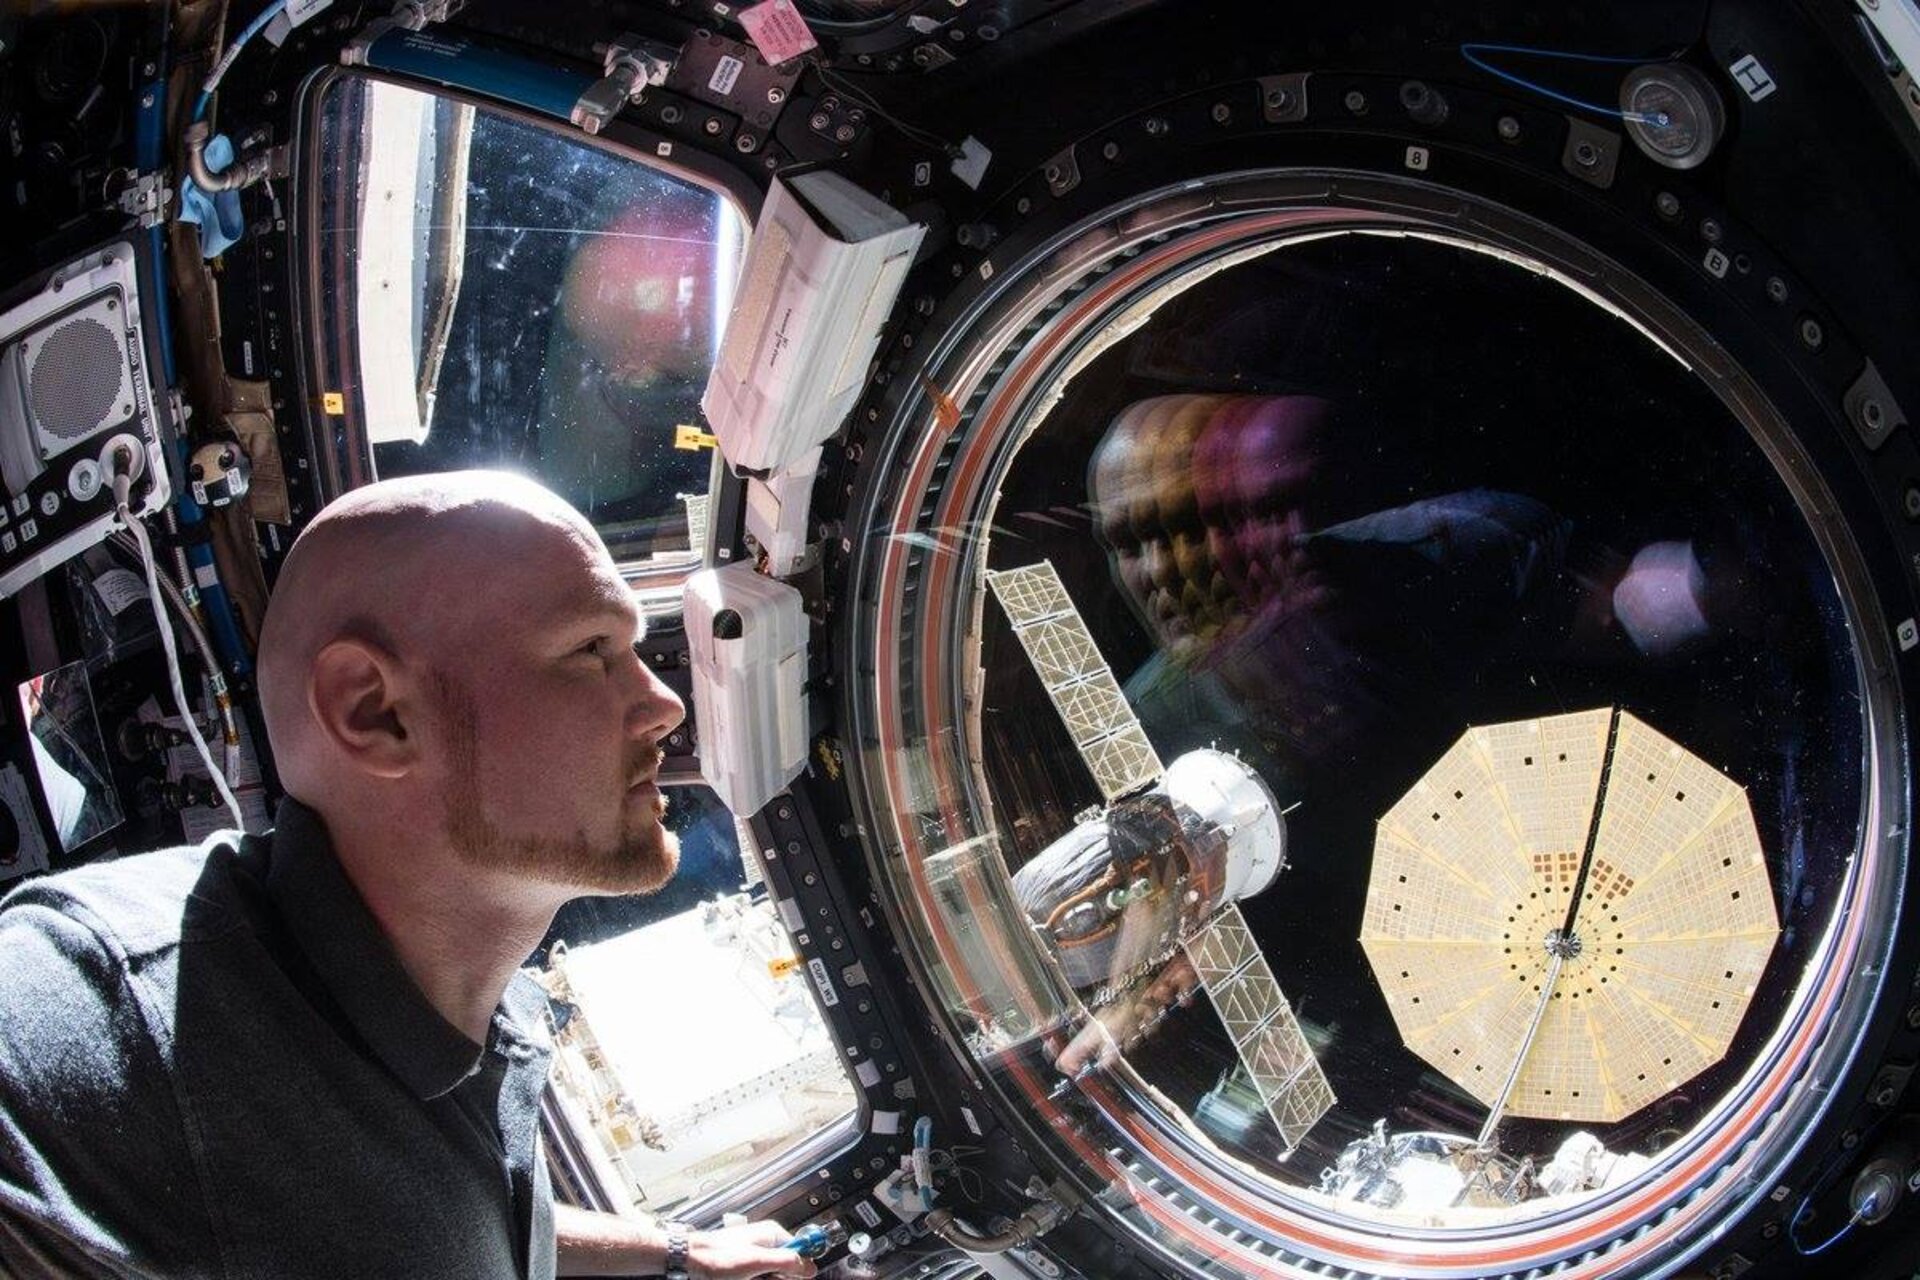 An astronaut's reflection